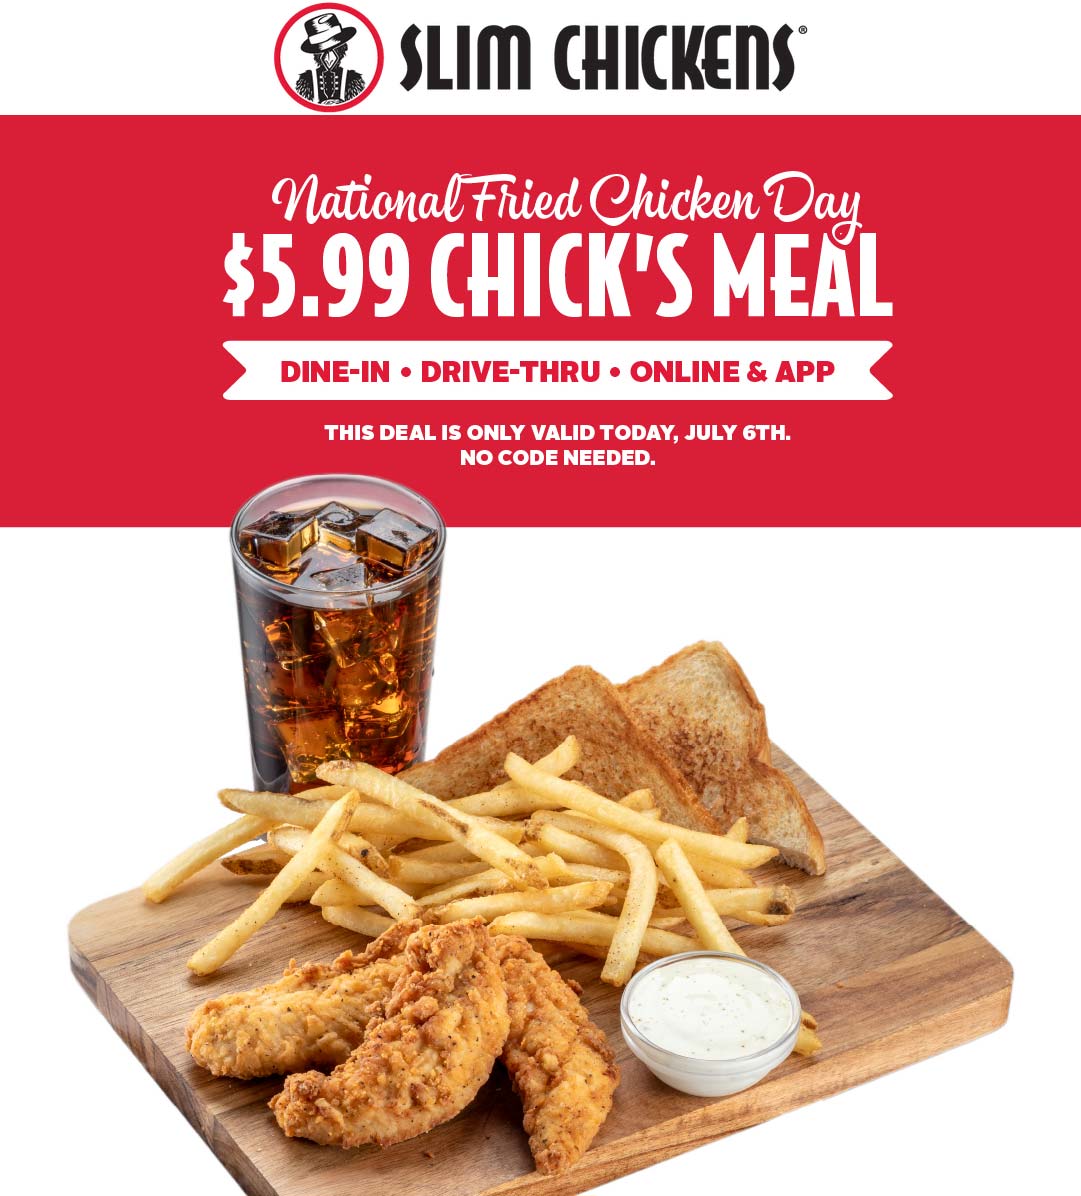 Slim Chickens restaurants Coupon  $6 chicken meal today at Slim Chickens #slimchickens 